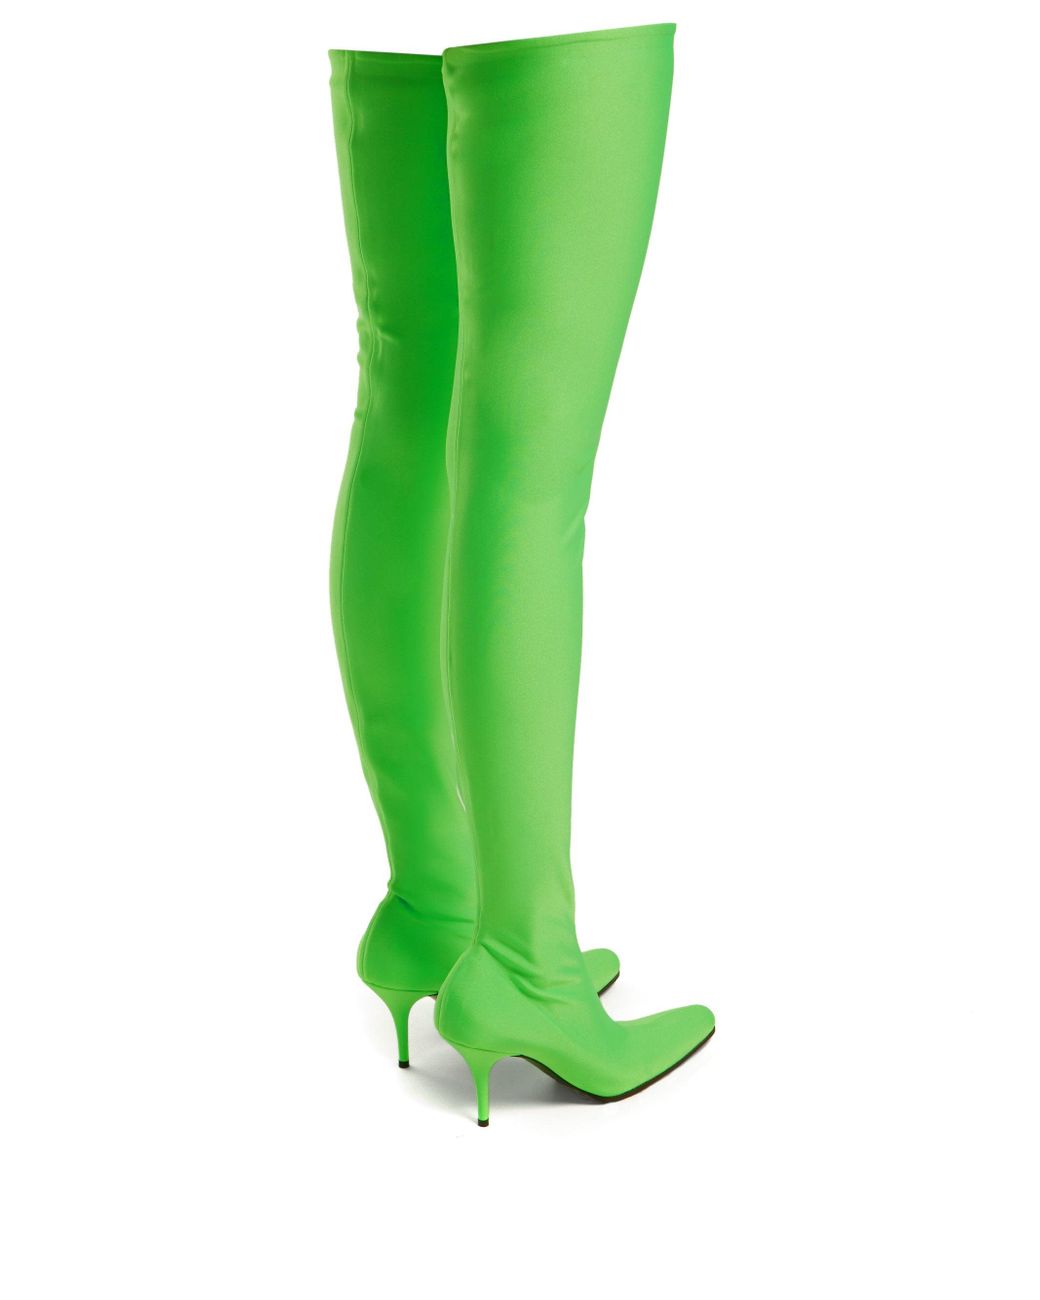 Cagole Leather Knee High Boots in Green  Balenciaga  Mytheresa